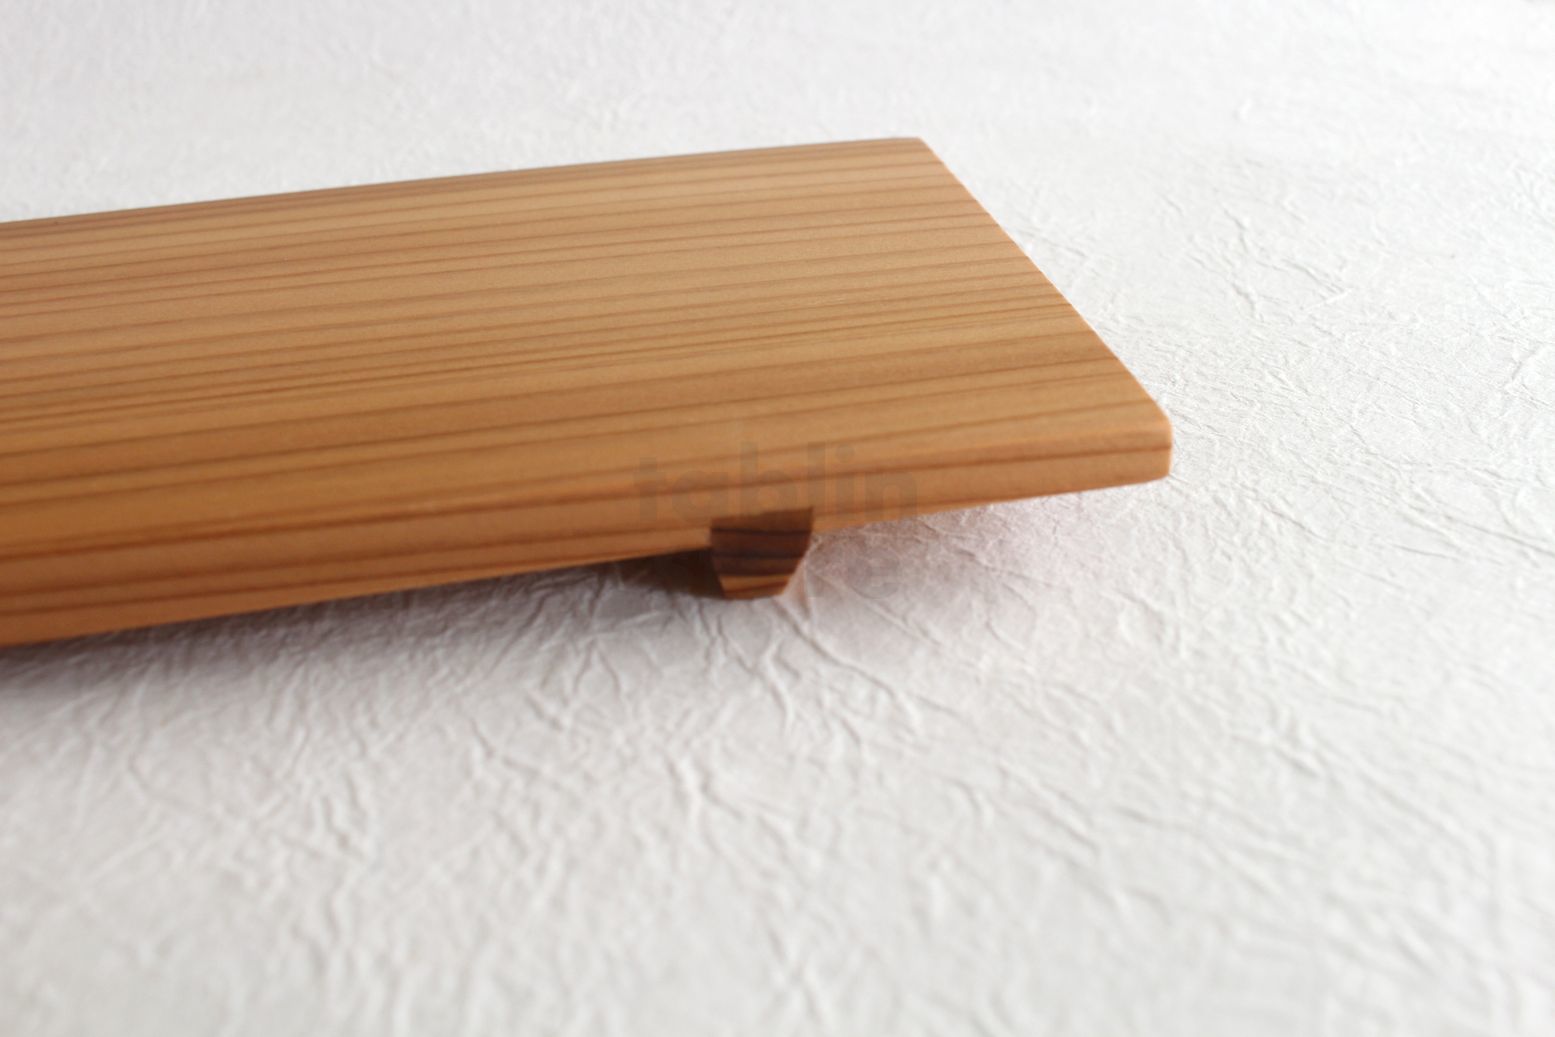 Japanese Wooden Maki Nigiri Sushi Geta Serving Tray Board 9.5" x 6" Solid Wood 